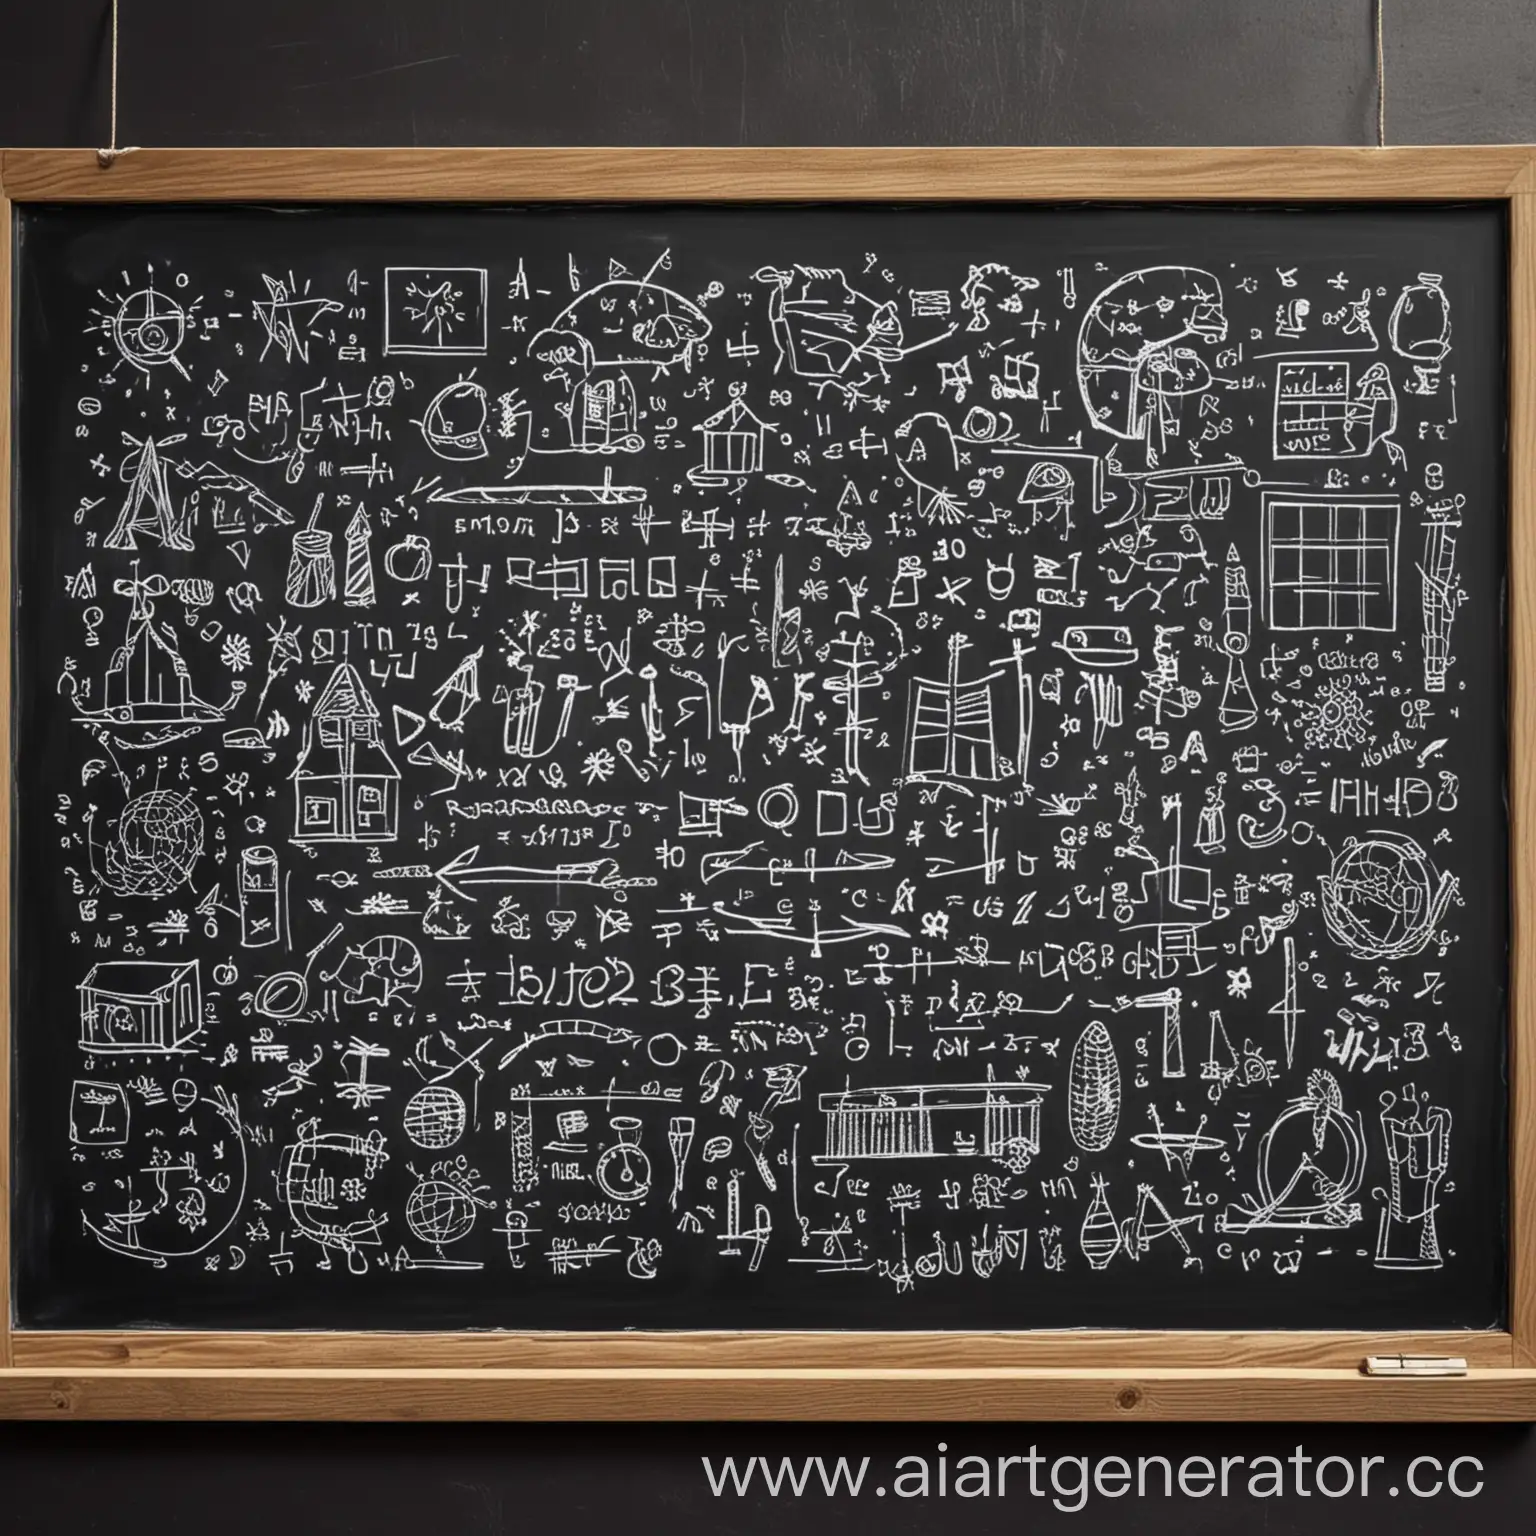 Chalkboard with light school drawings on mathematics